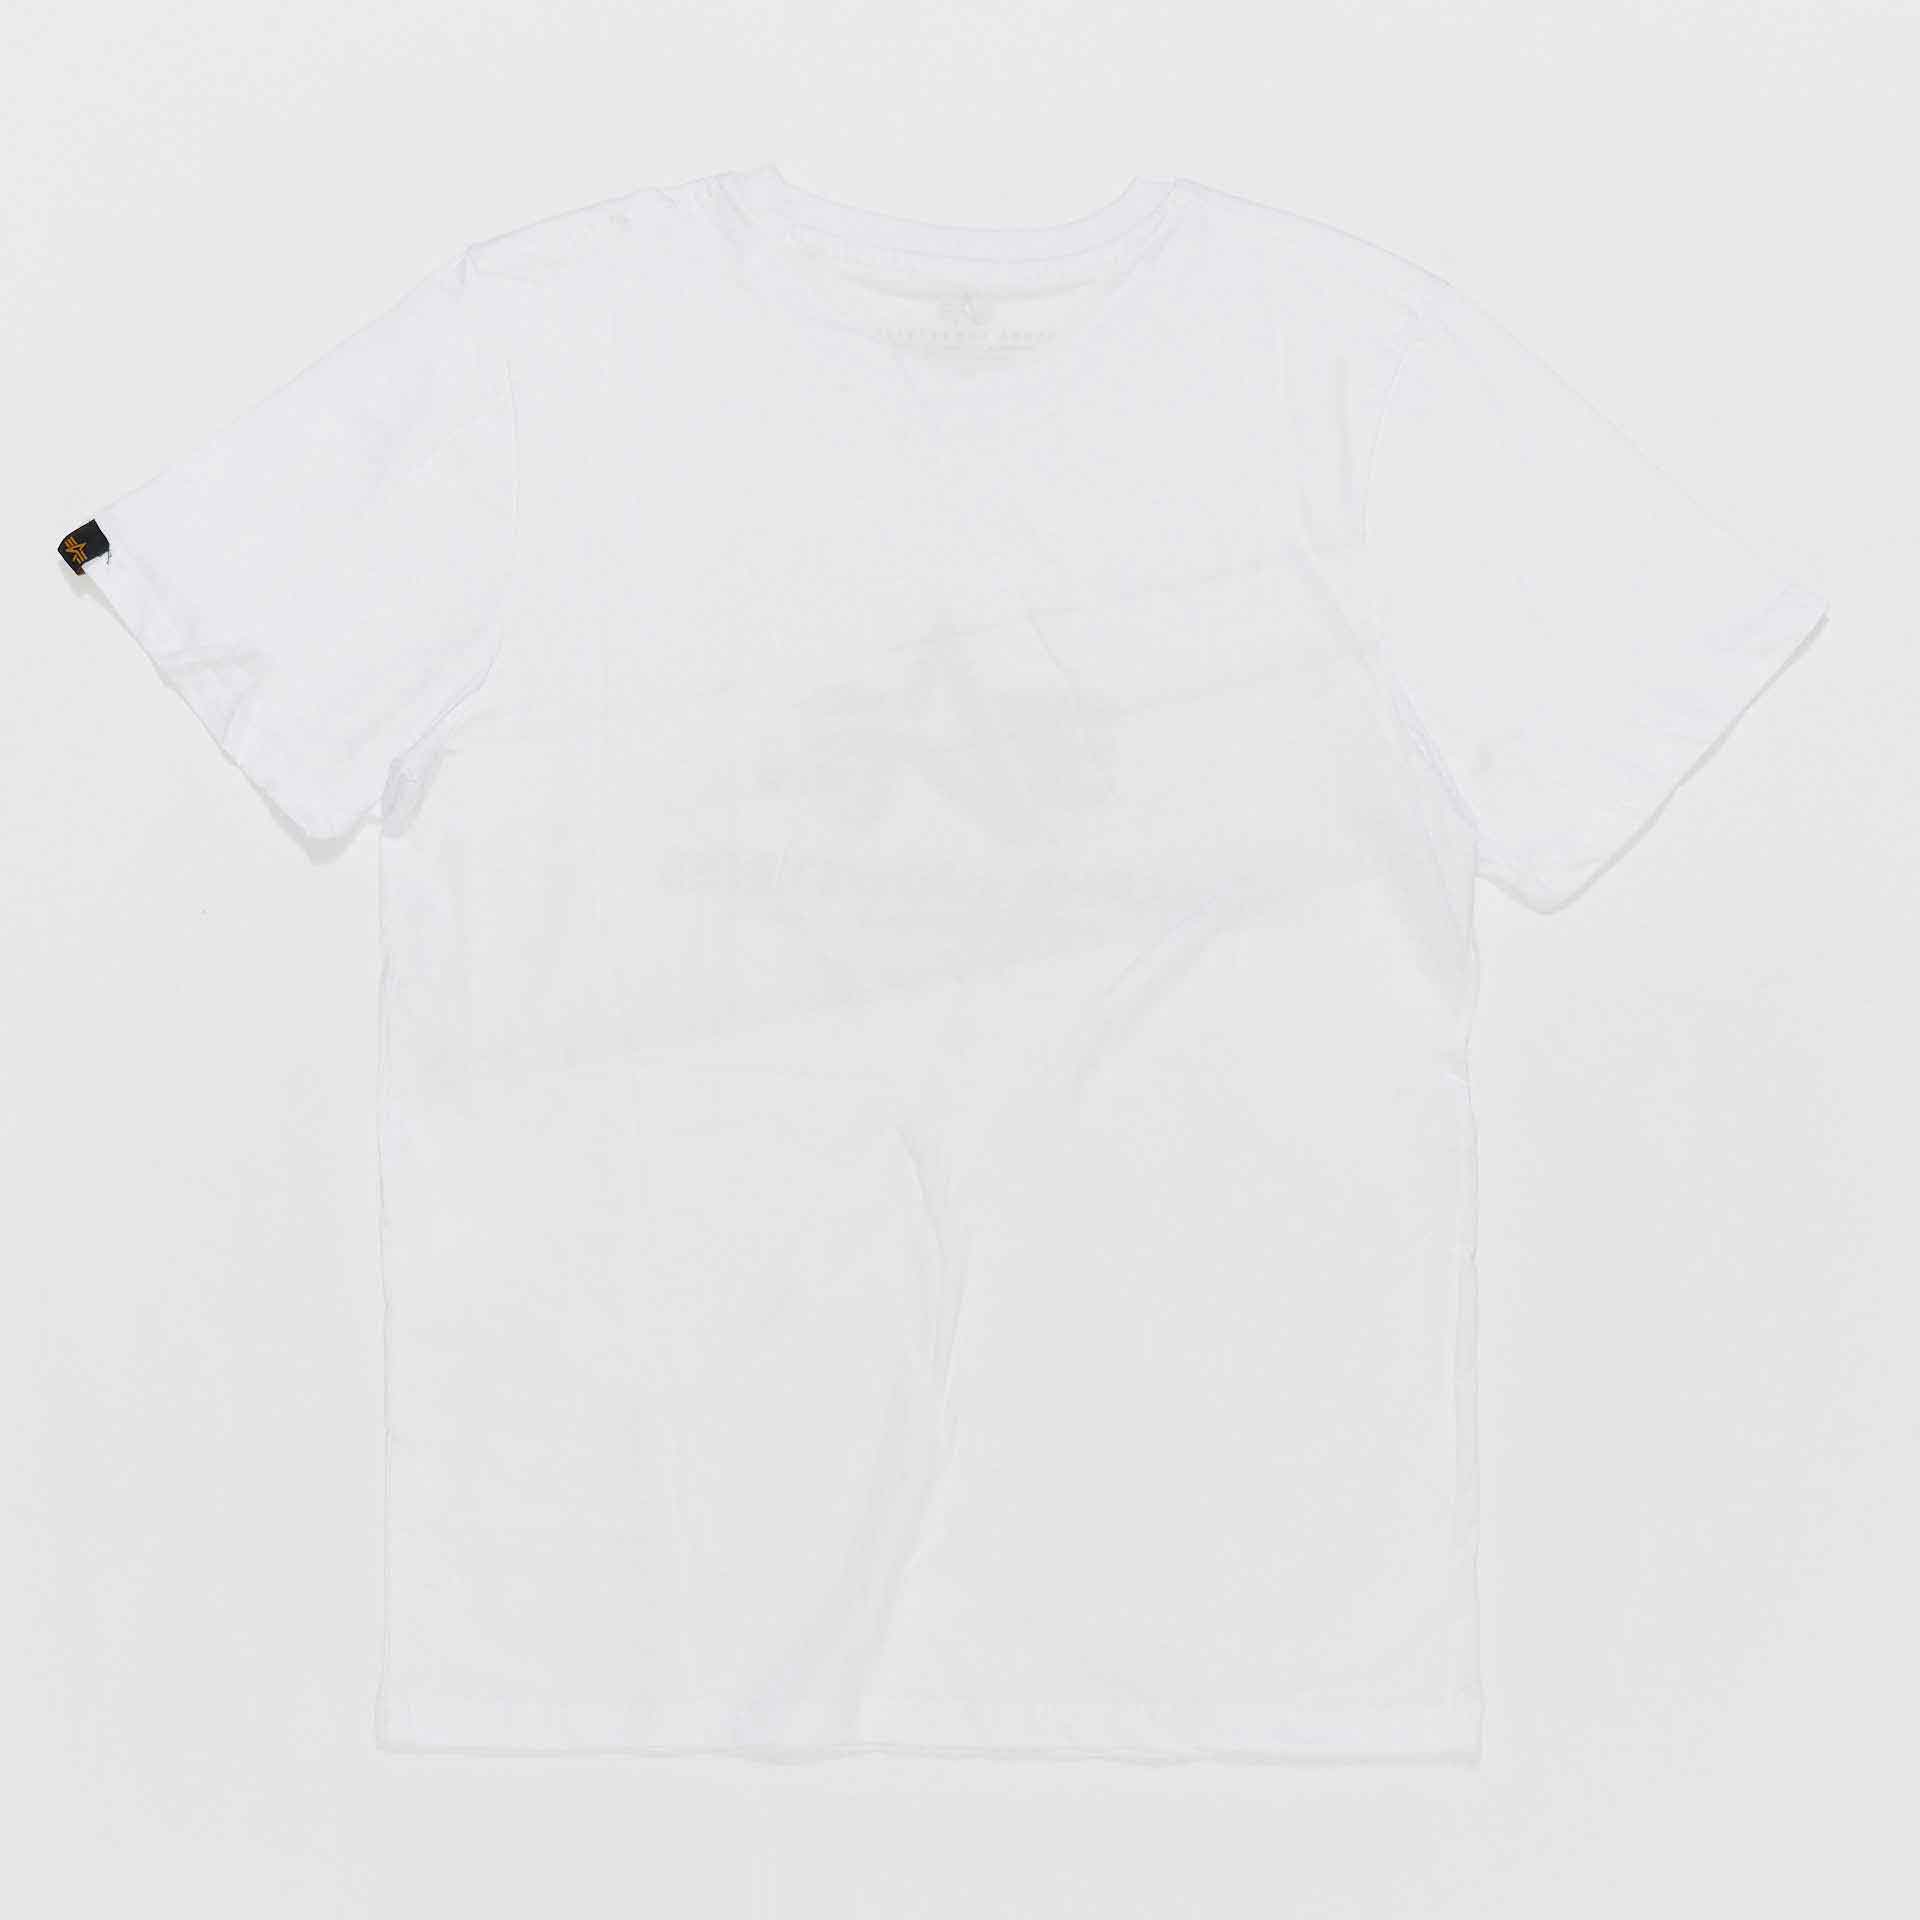 Alpha Industries Basic T-Shirt Foil Print White/Yellow Golden